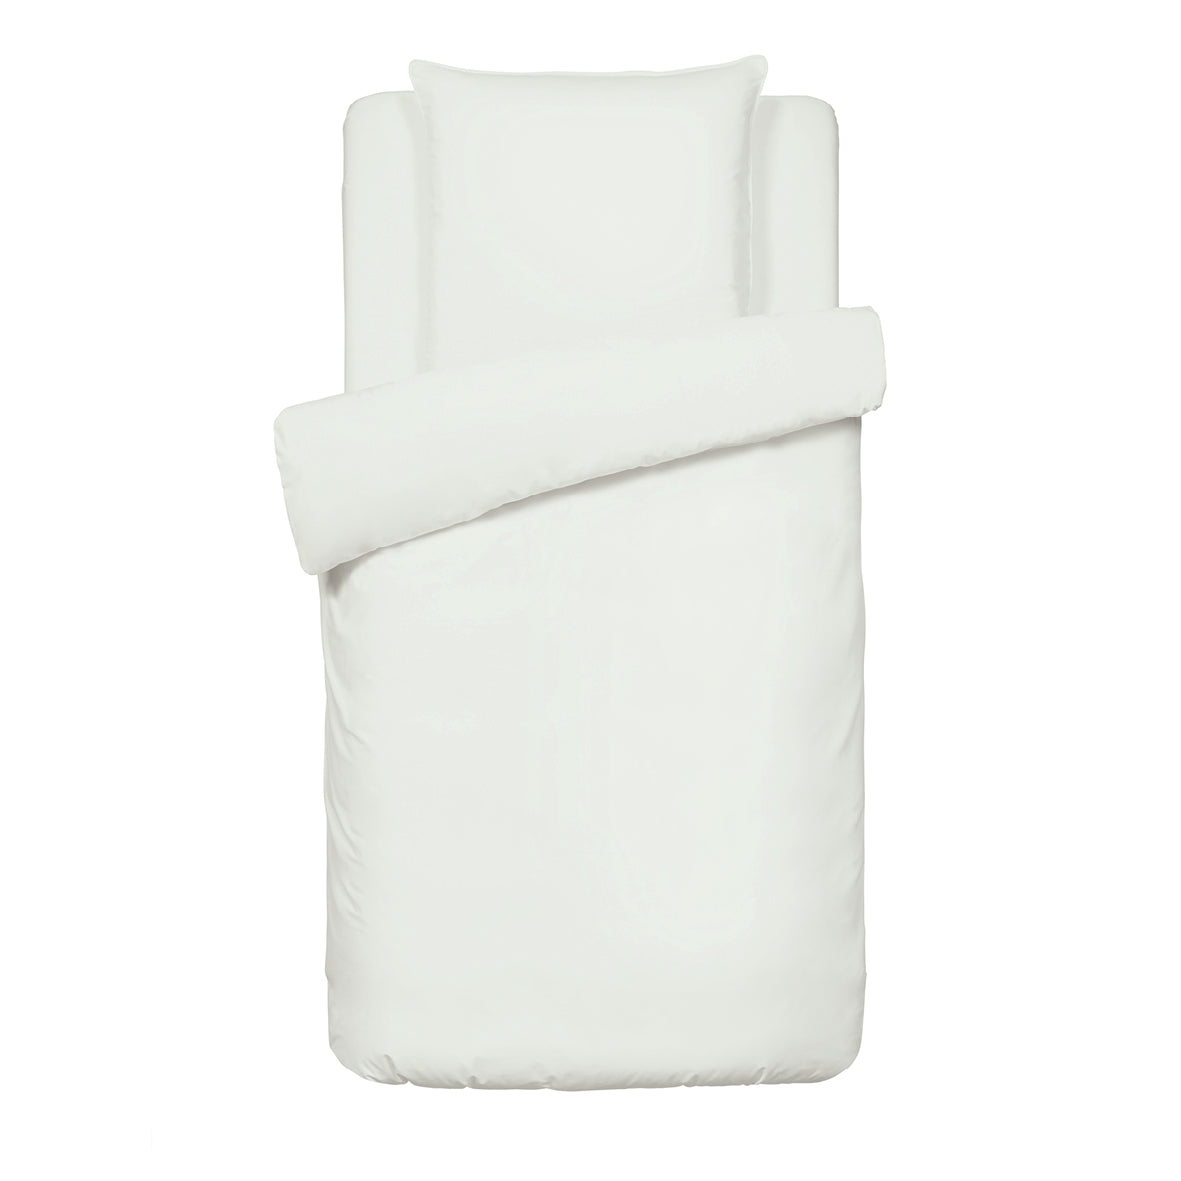 Duvet cover + pillowcase(s) cotton satin - Uni Thyme Green